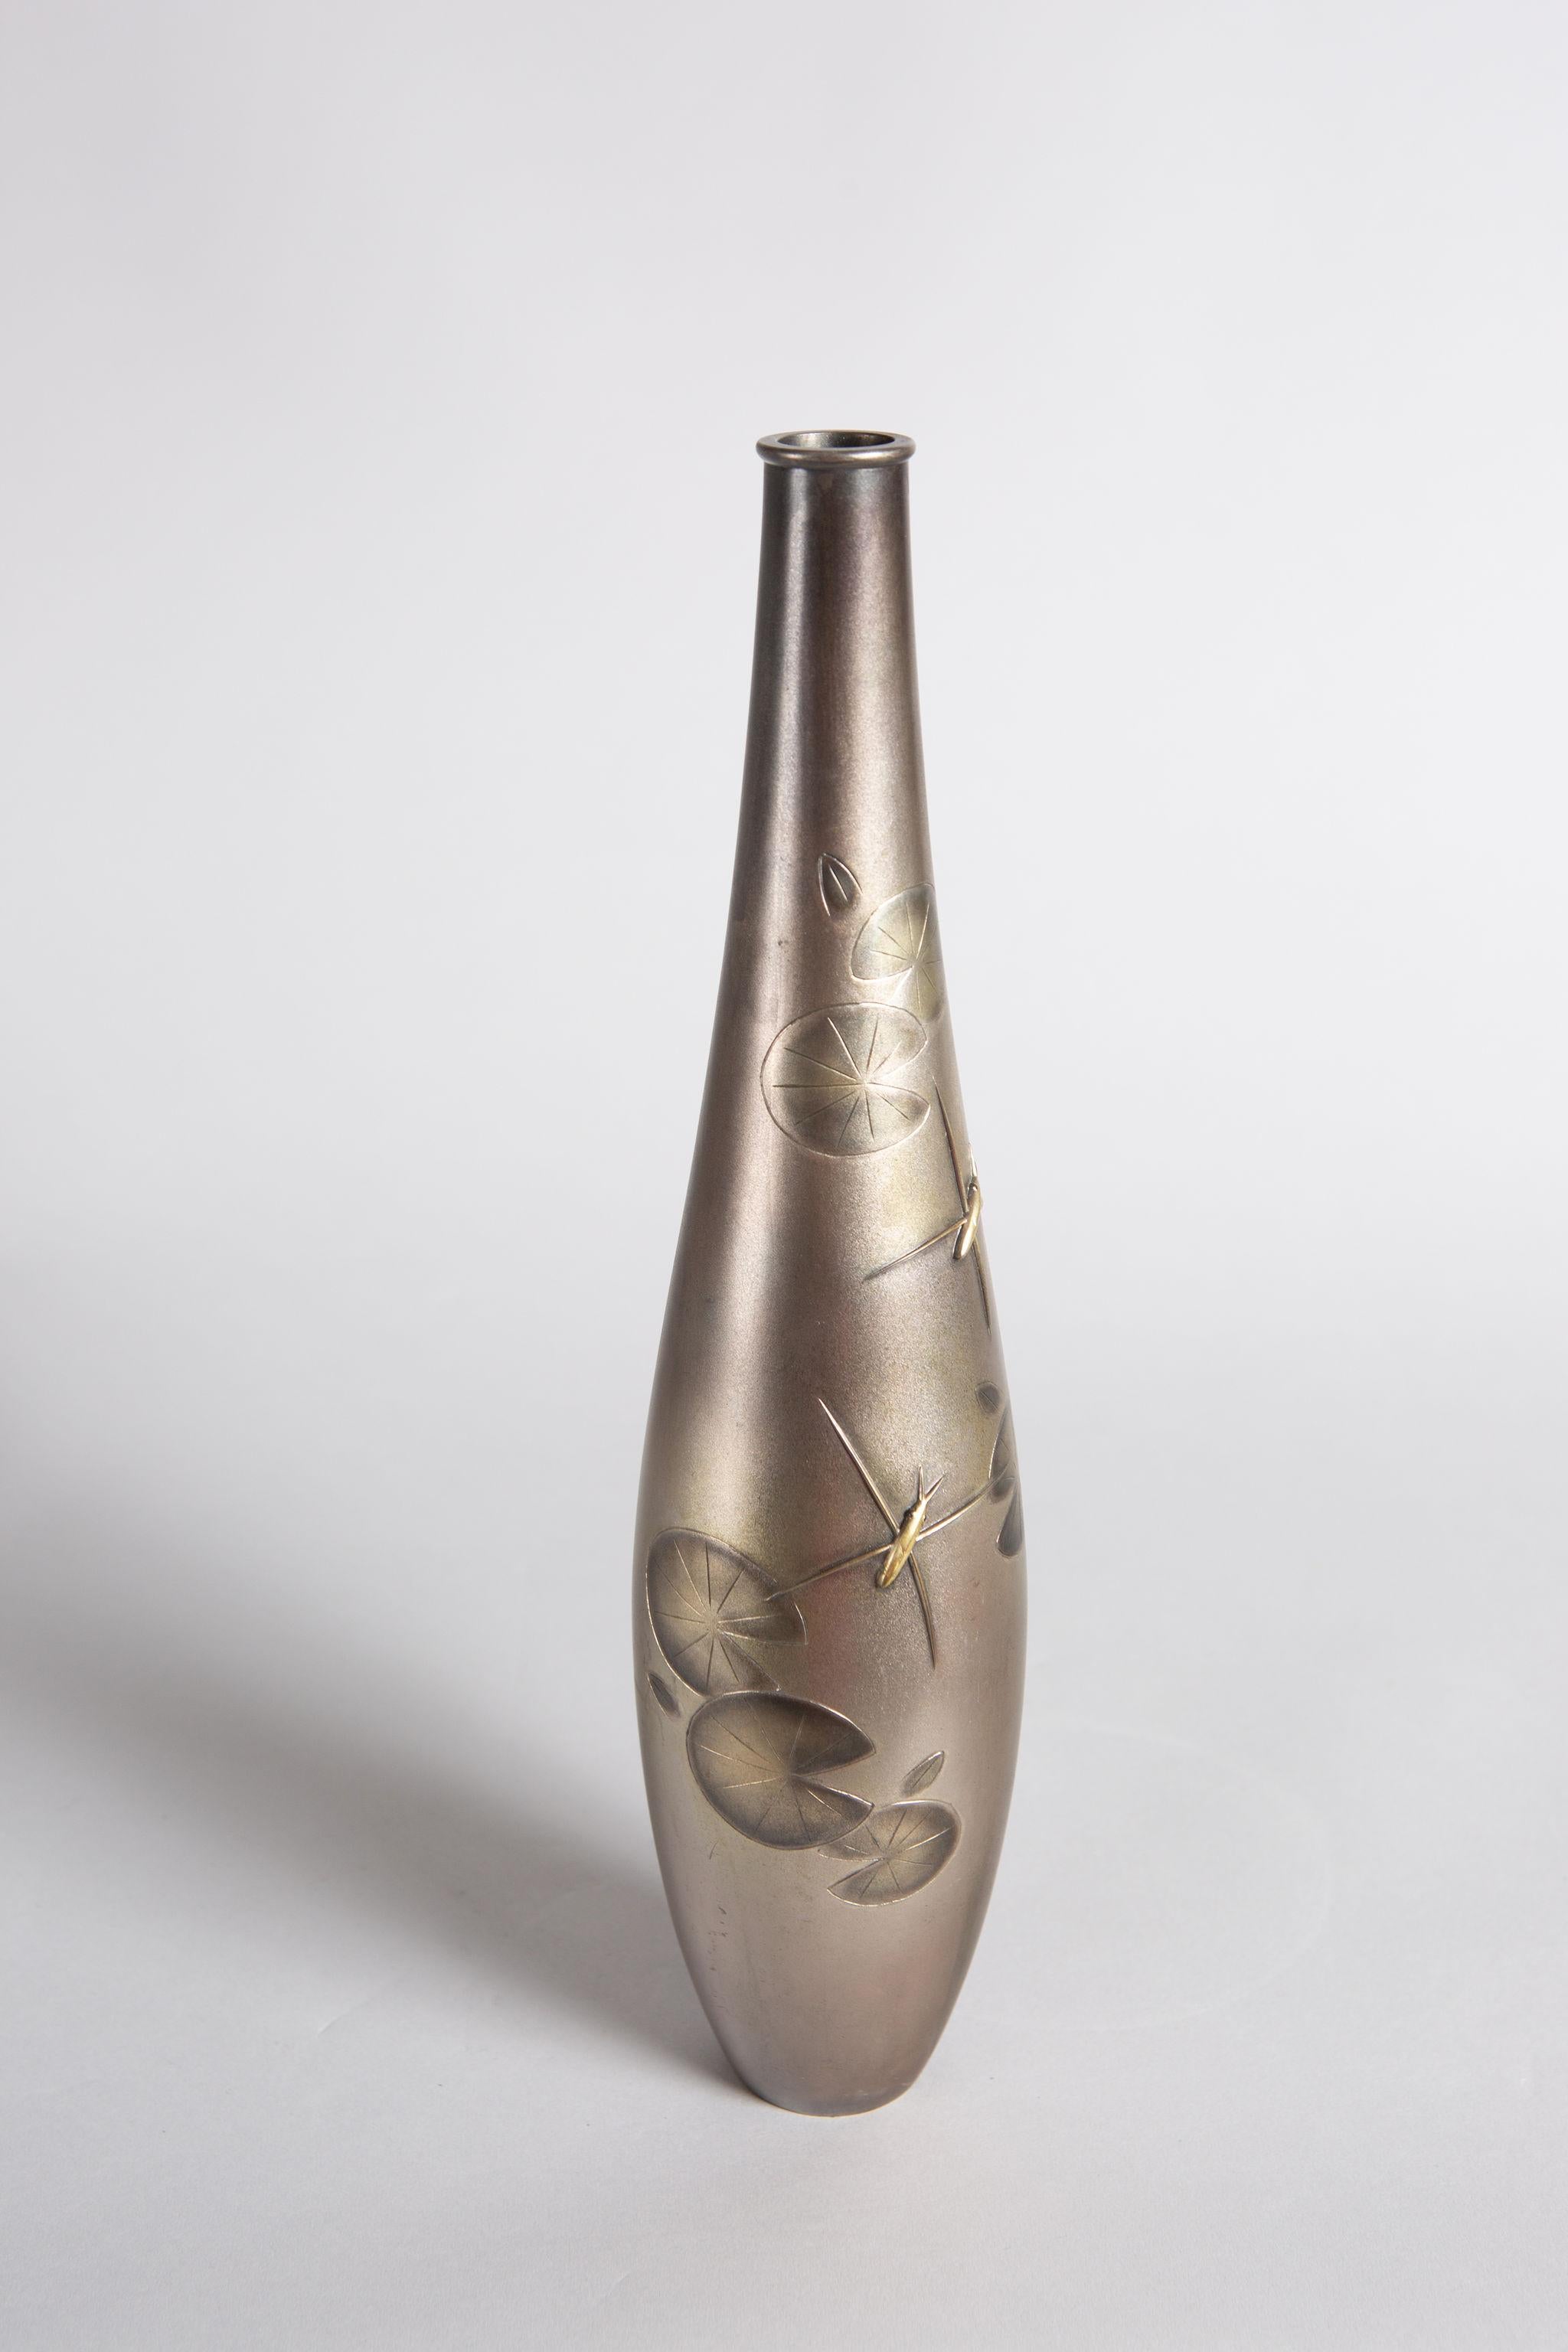 Metal Japanese Silvered Bronze Vase with Water Striders